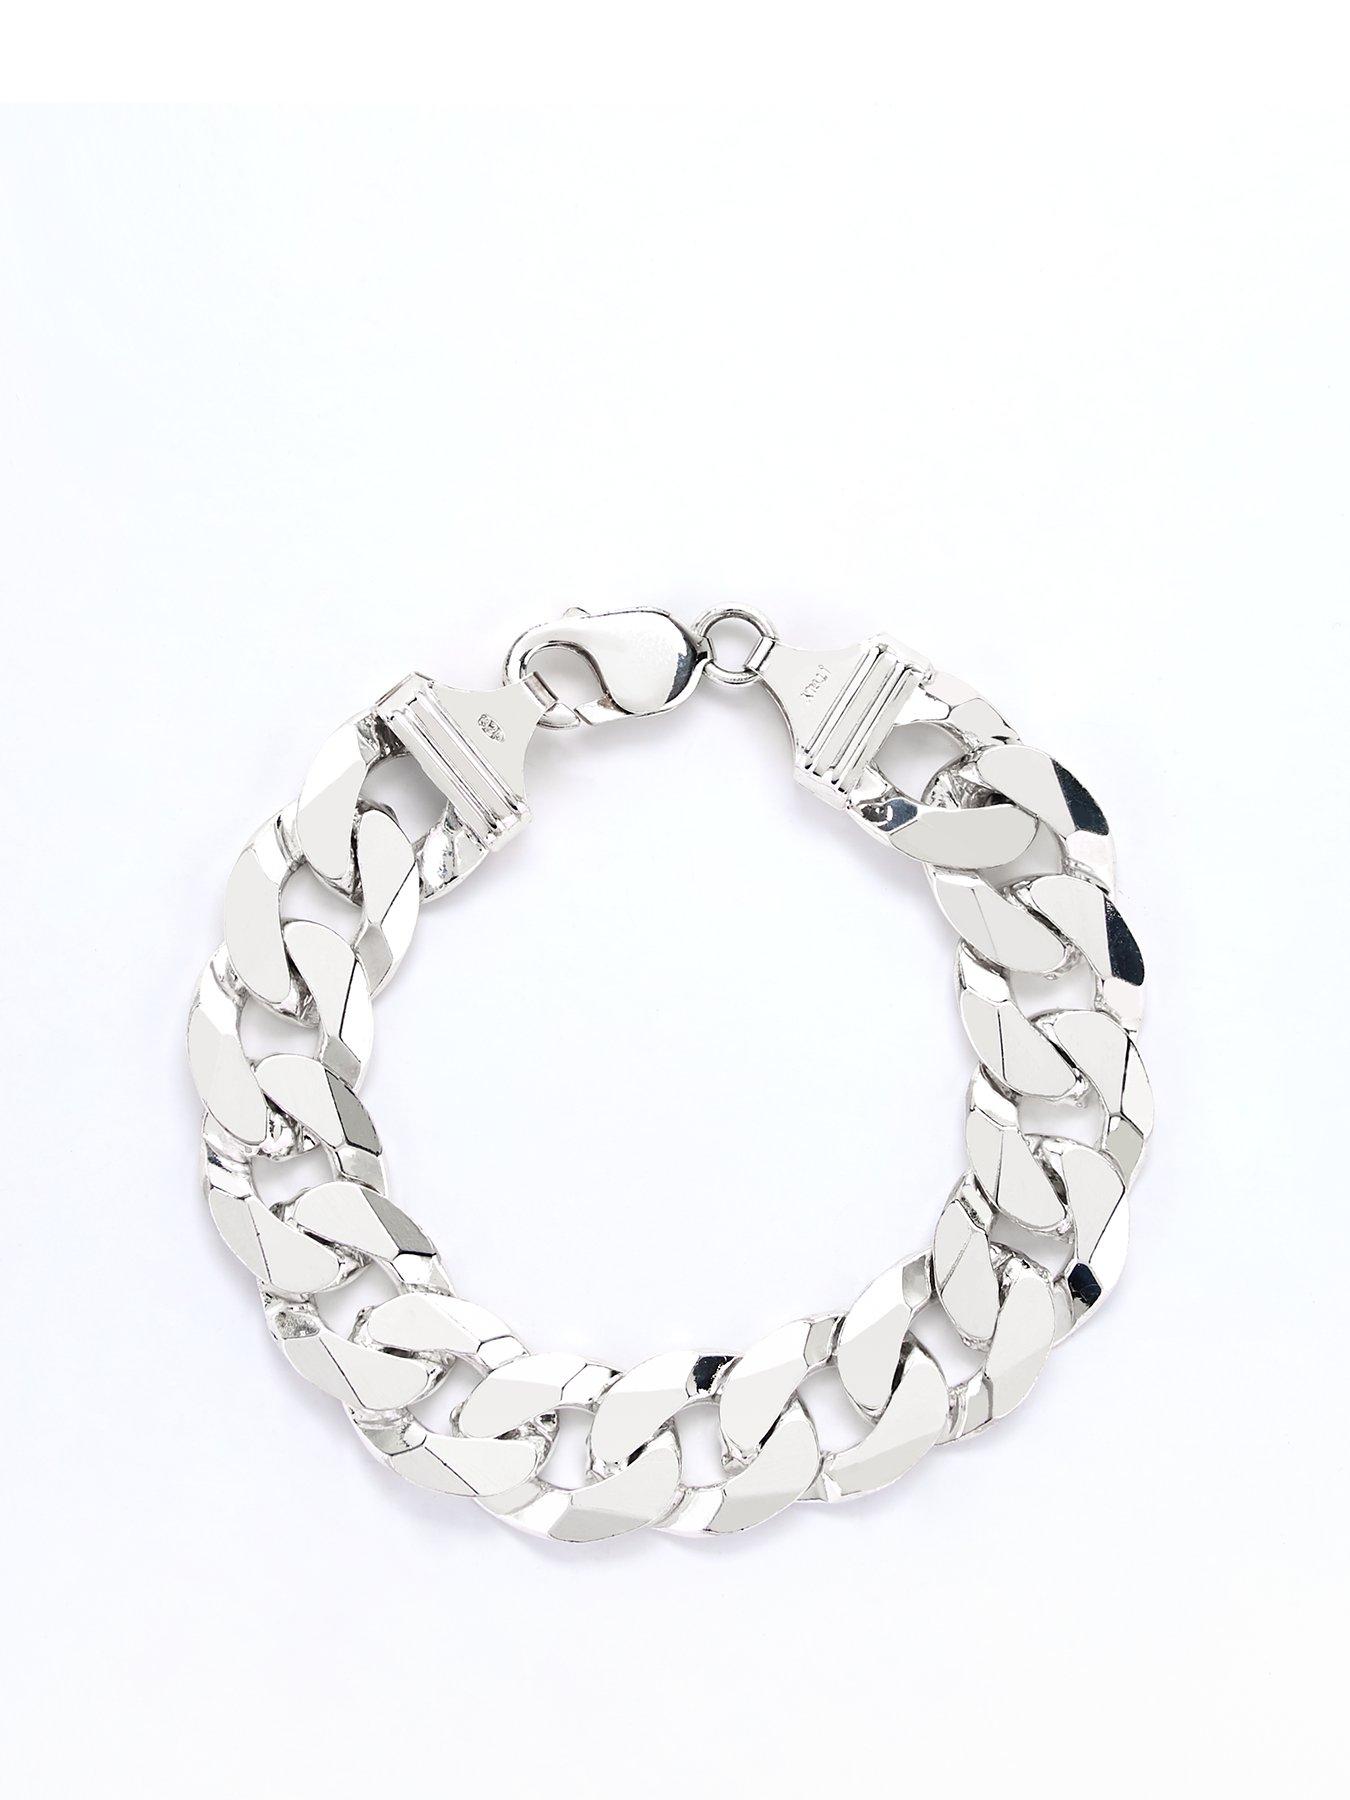  Mens Sterling Silver 9 Inch 2 oz Curb Chain Bracelet